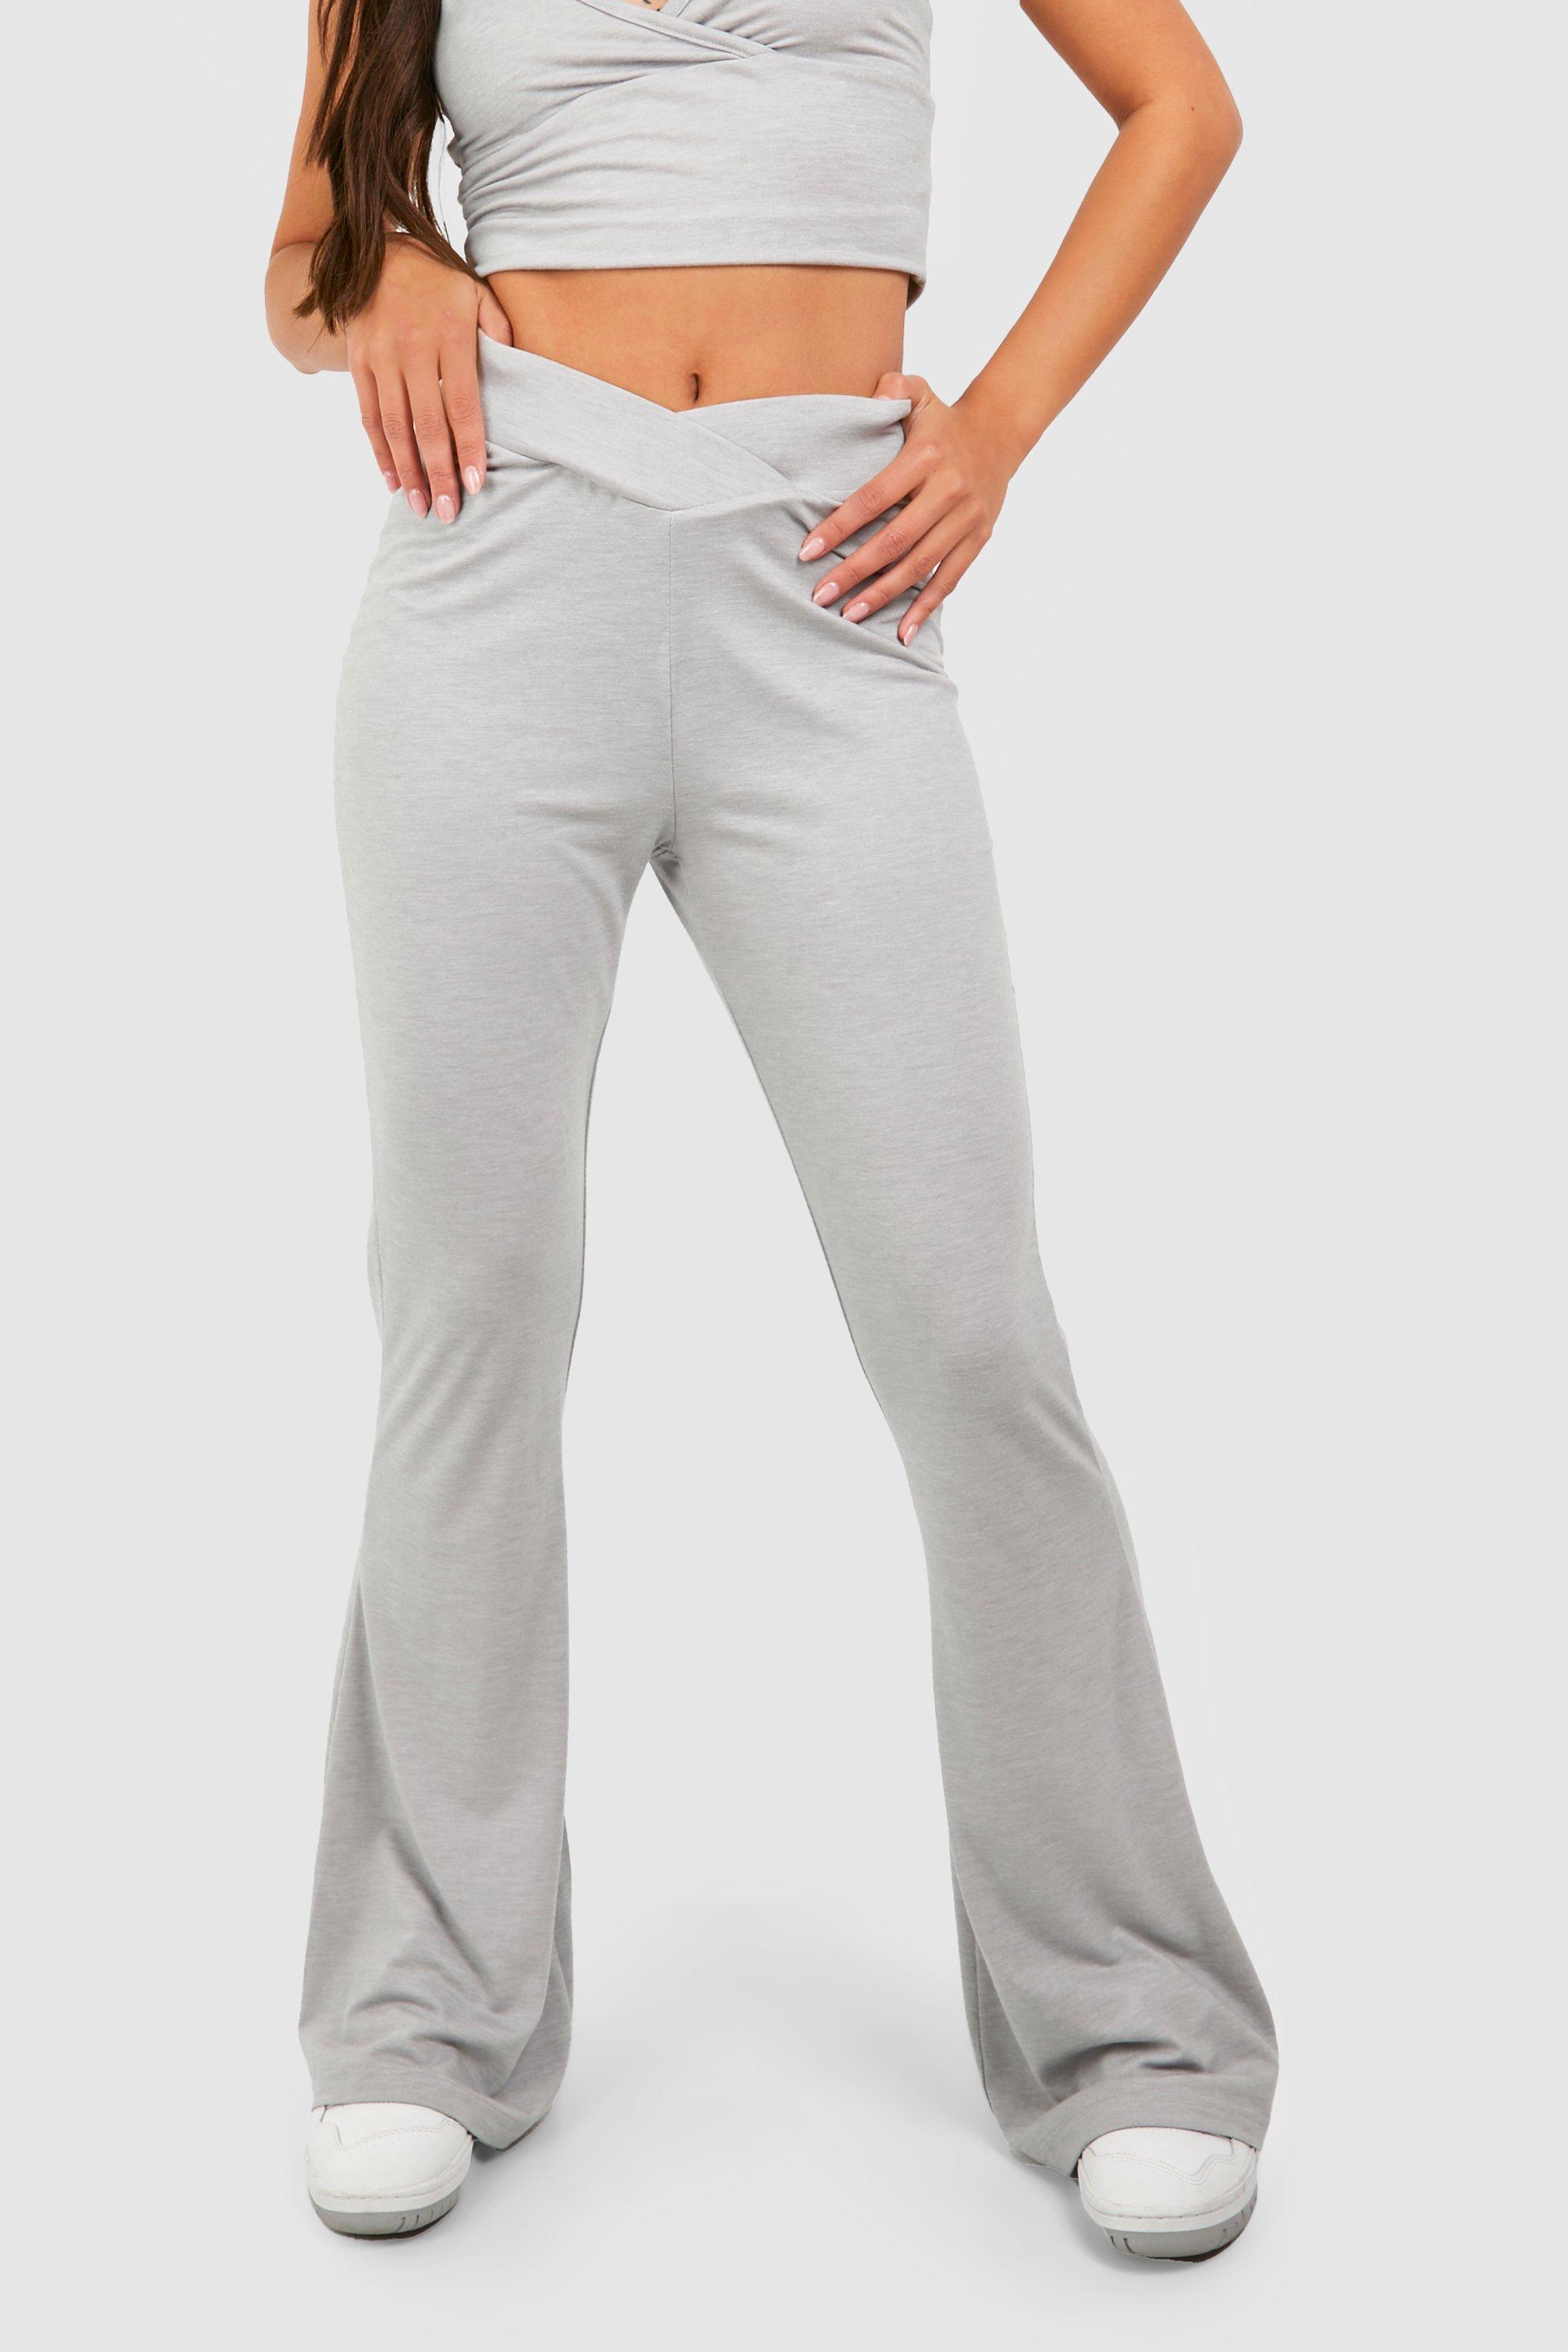 PrettyLittleThing Shape Grey Marl Jersey Flared Trousers PLT